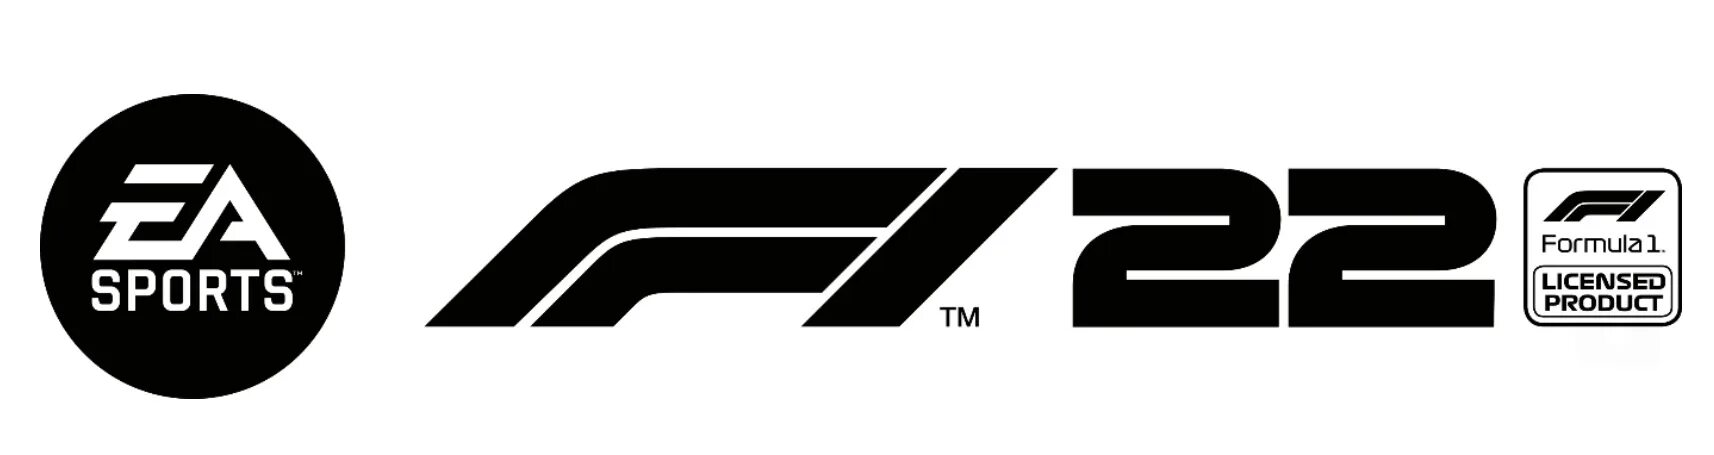 EA Sports f1 2002. Formula 1 logo. F1 22 логотип. EA Sports f1 22 logo. 22 01 2023